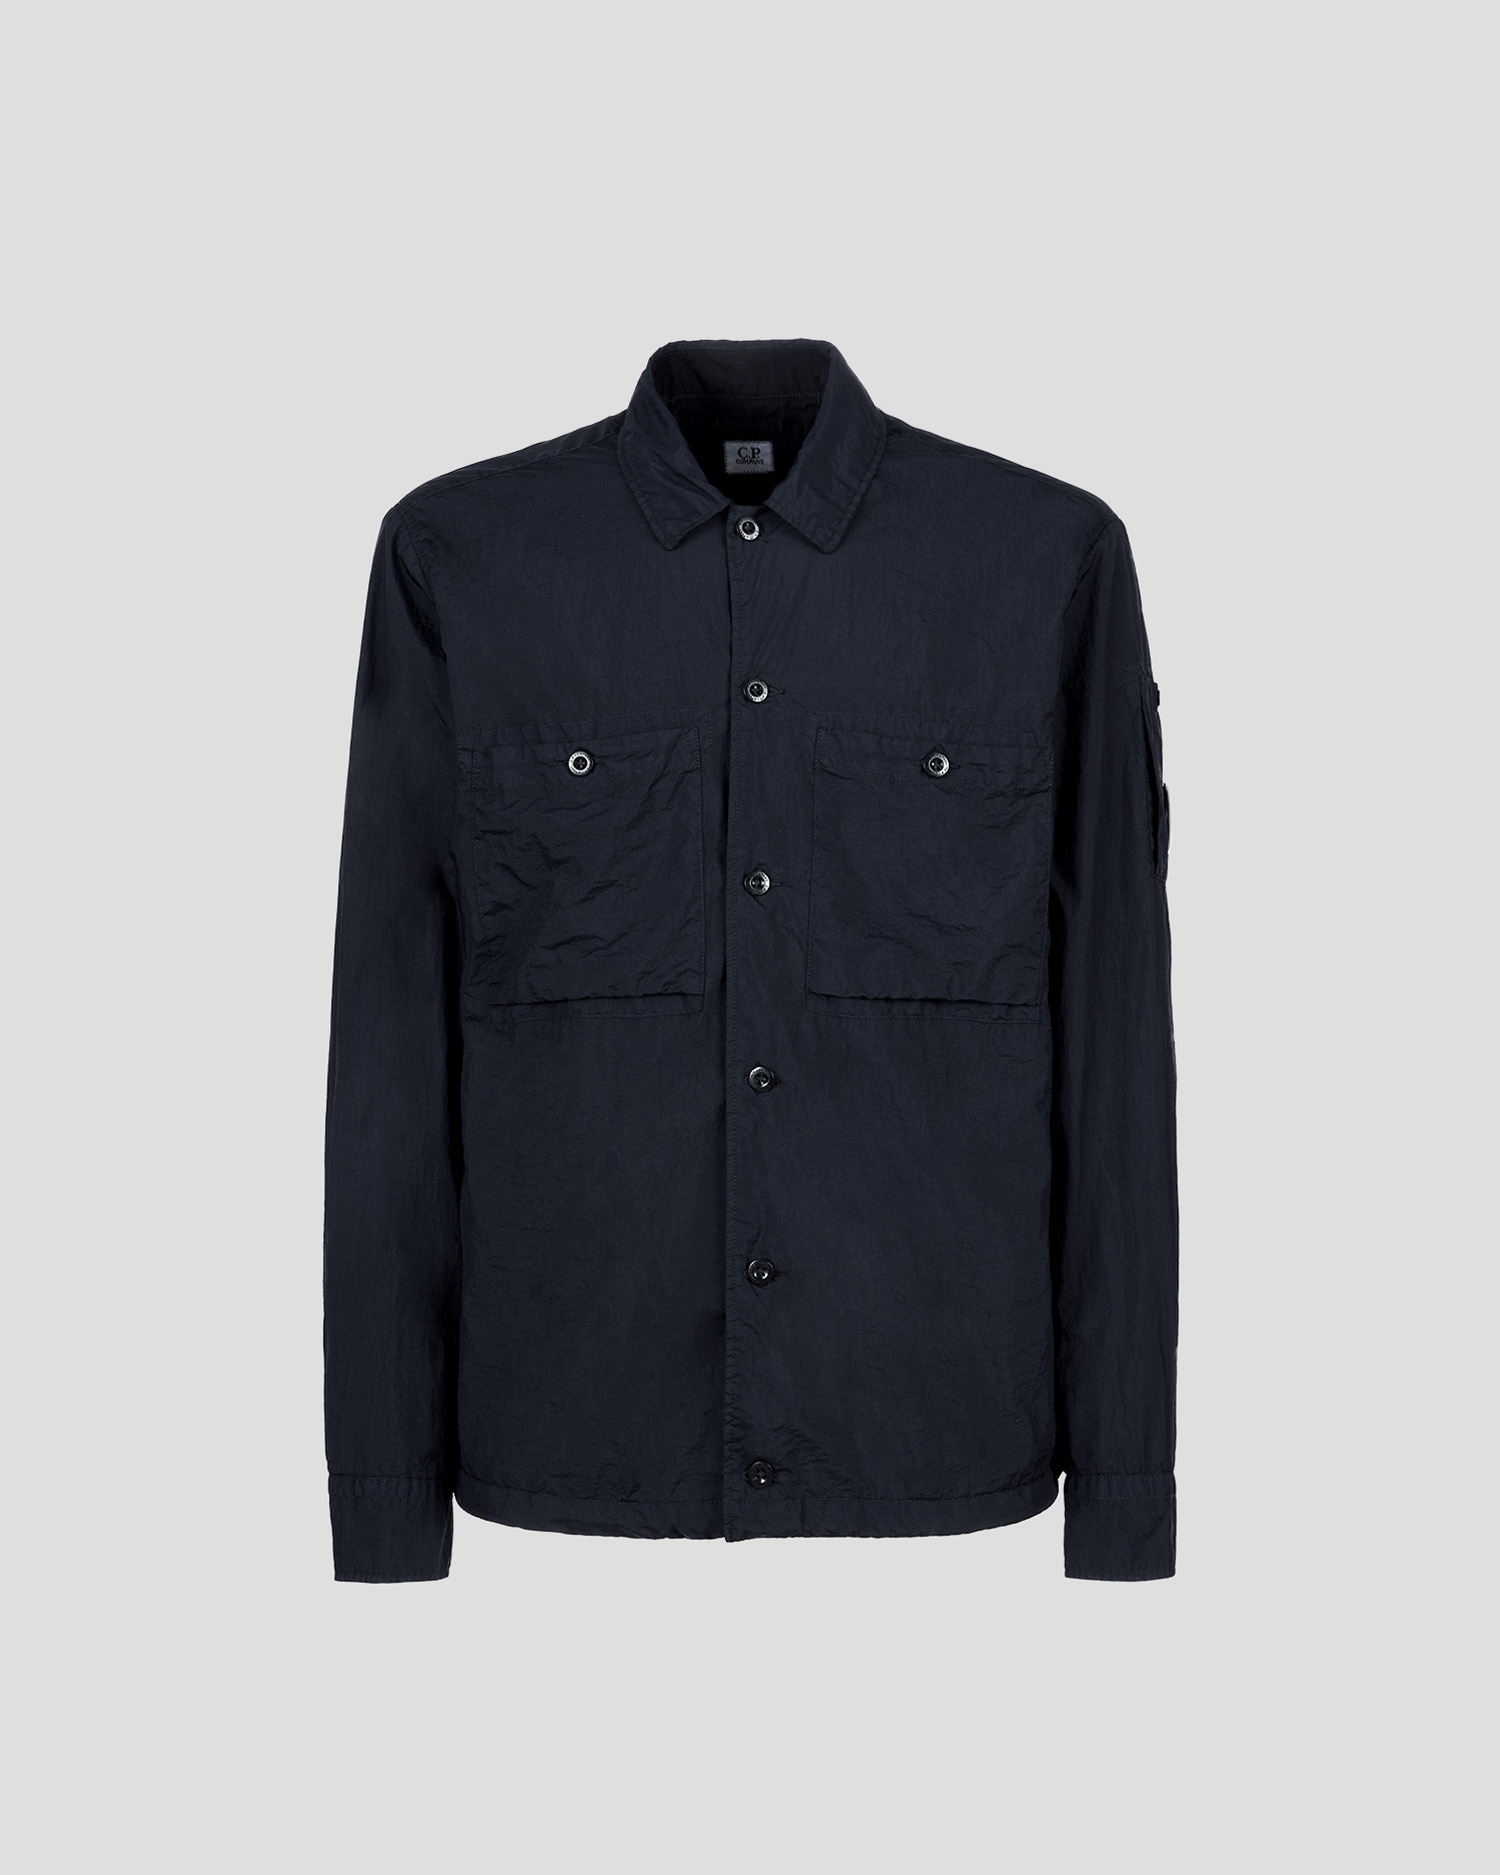 Taylon L Shirt | C.P. Company Online Store